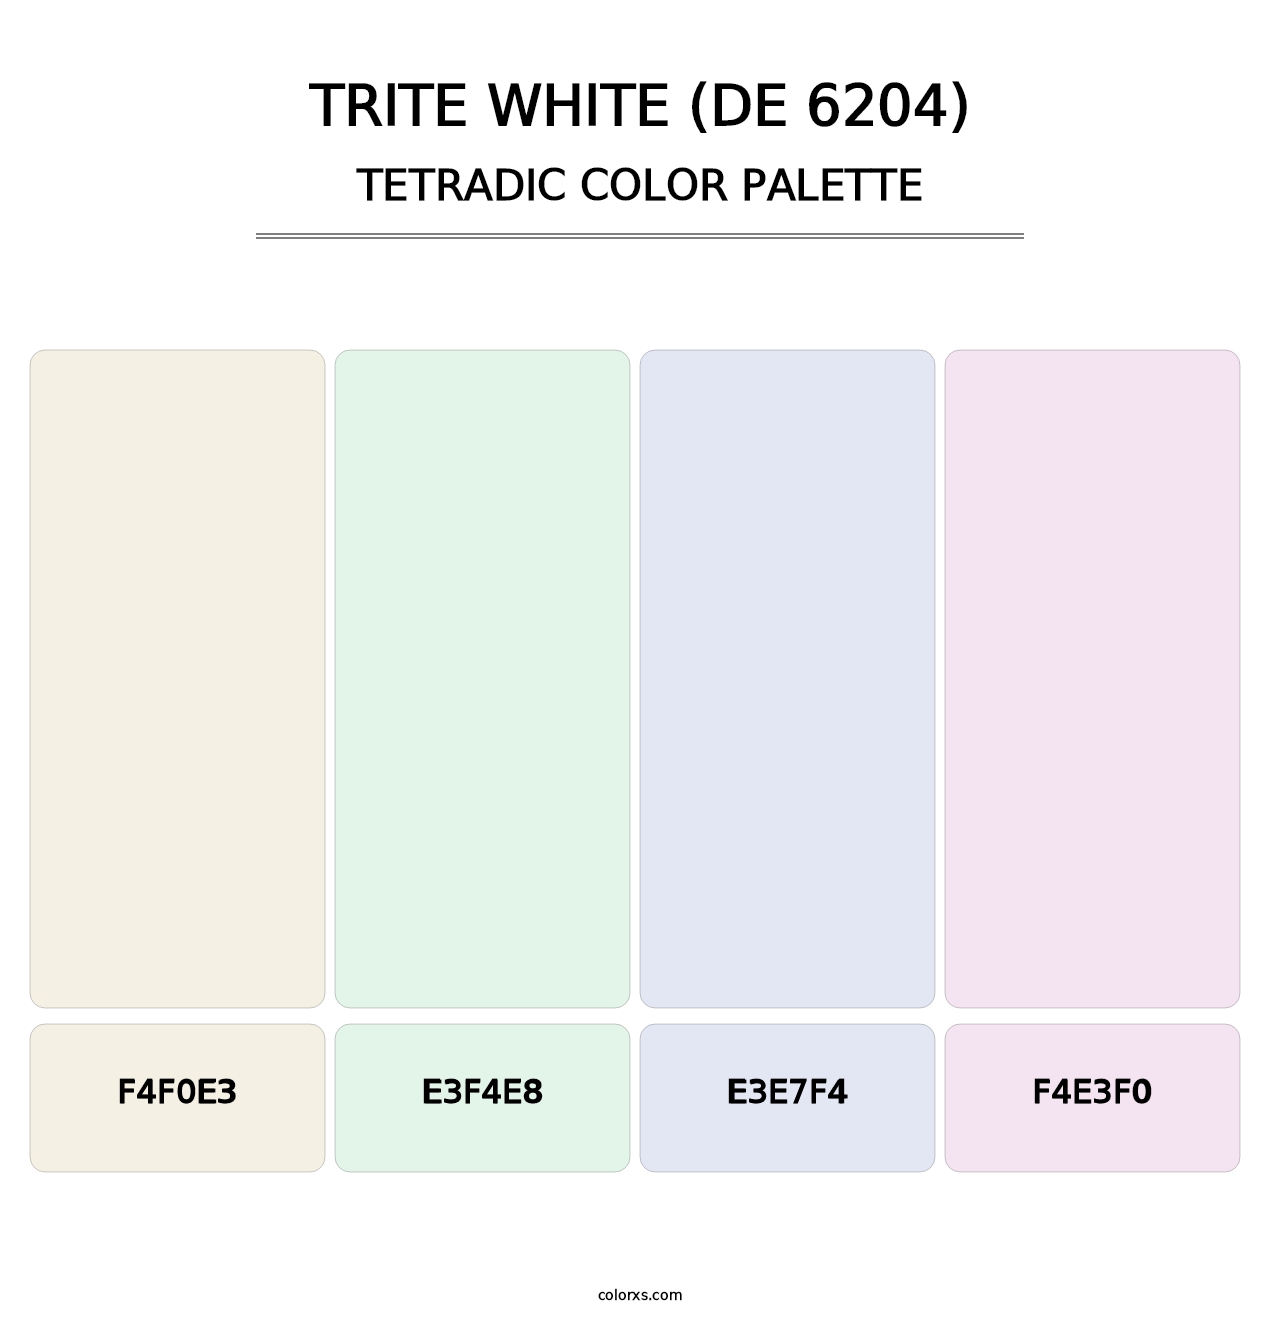 Trite White (DE 6204) - Tetradic Color Palette